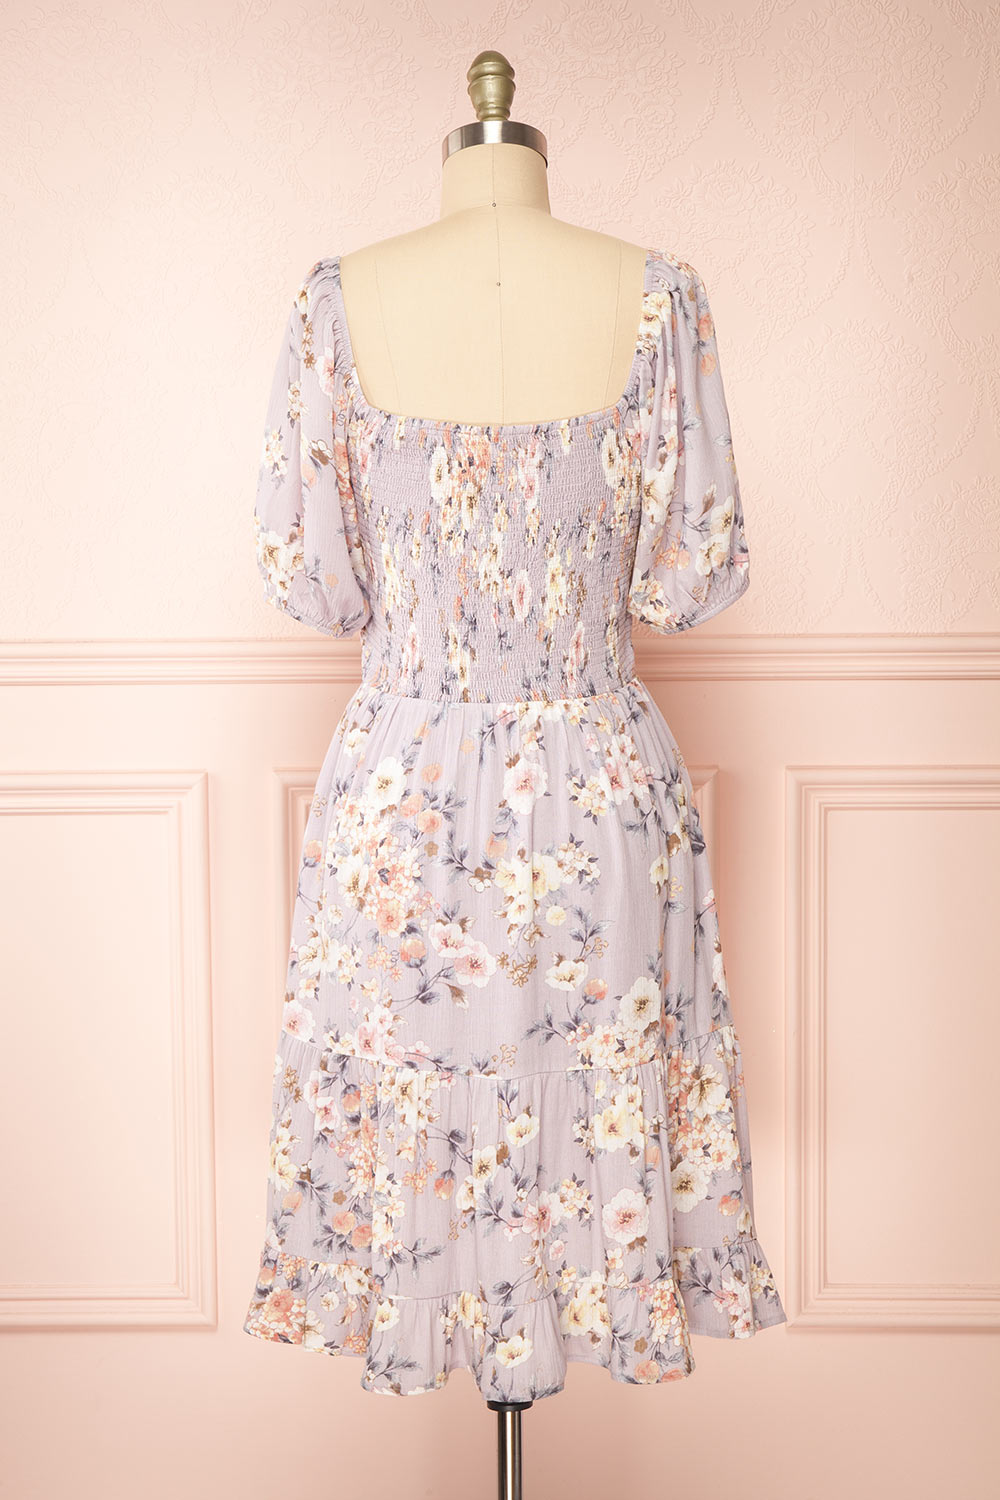 Evalina Lavender Floral Midi Dress | Boutique 1861 back view